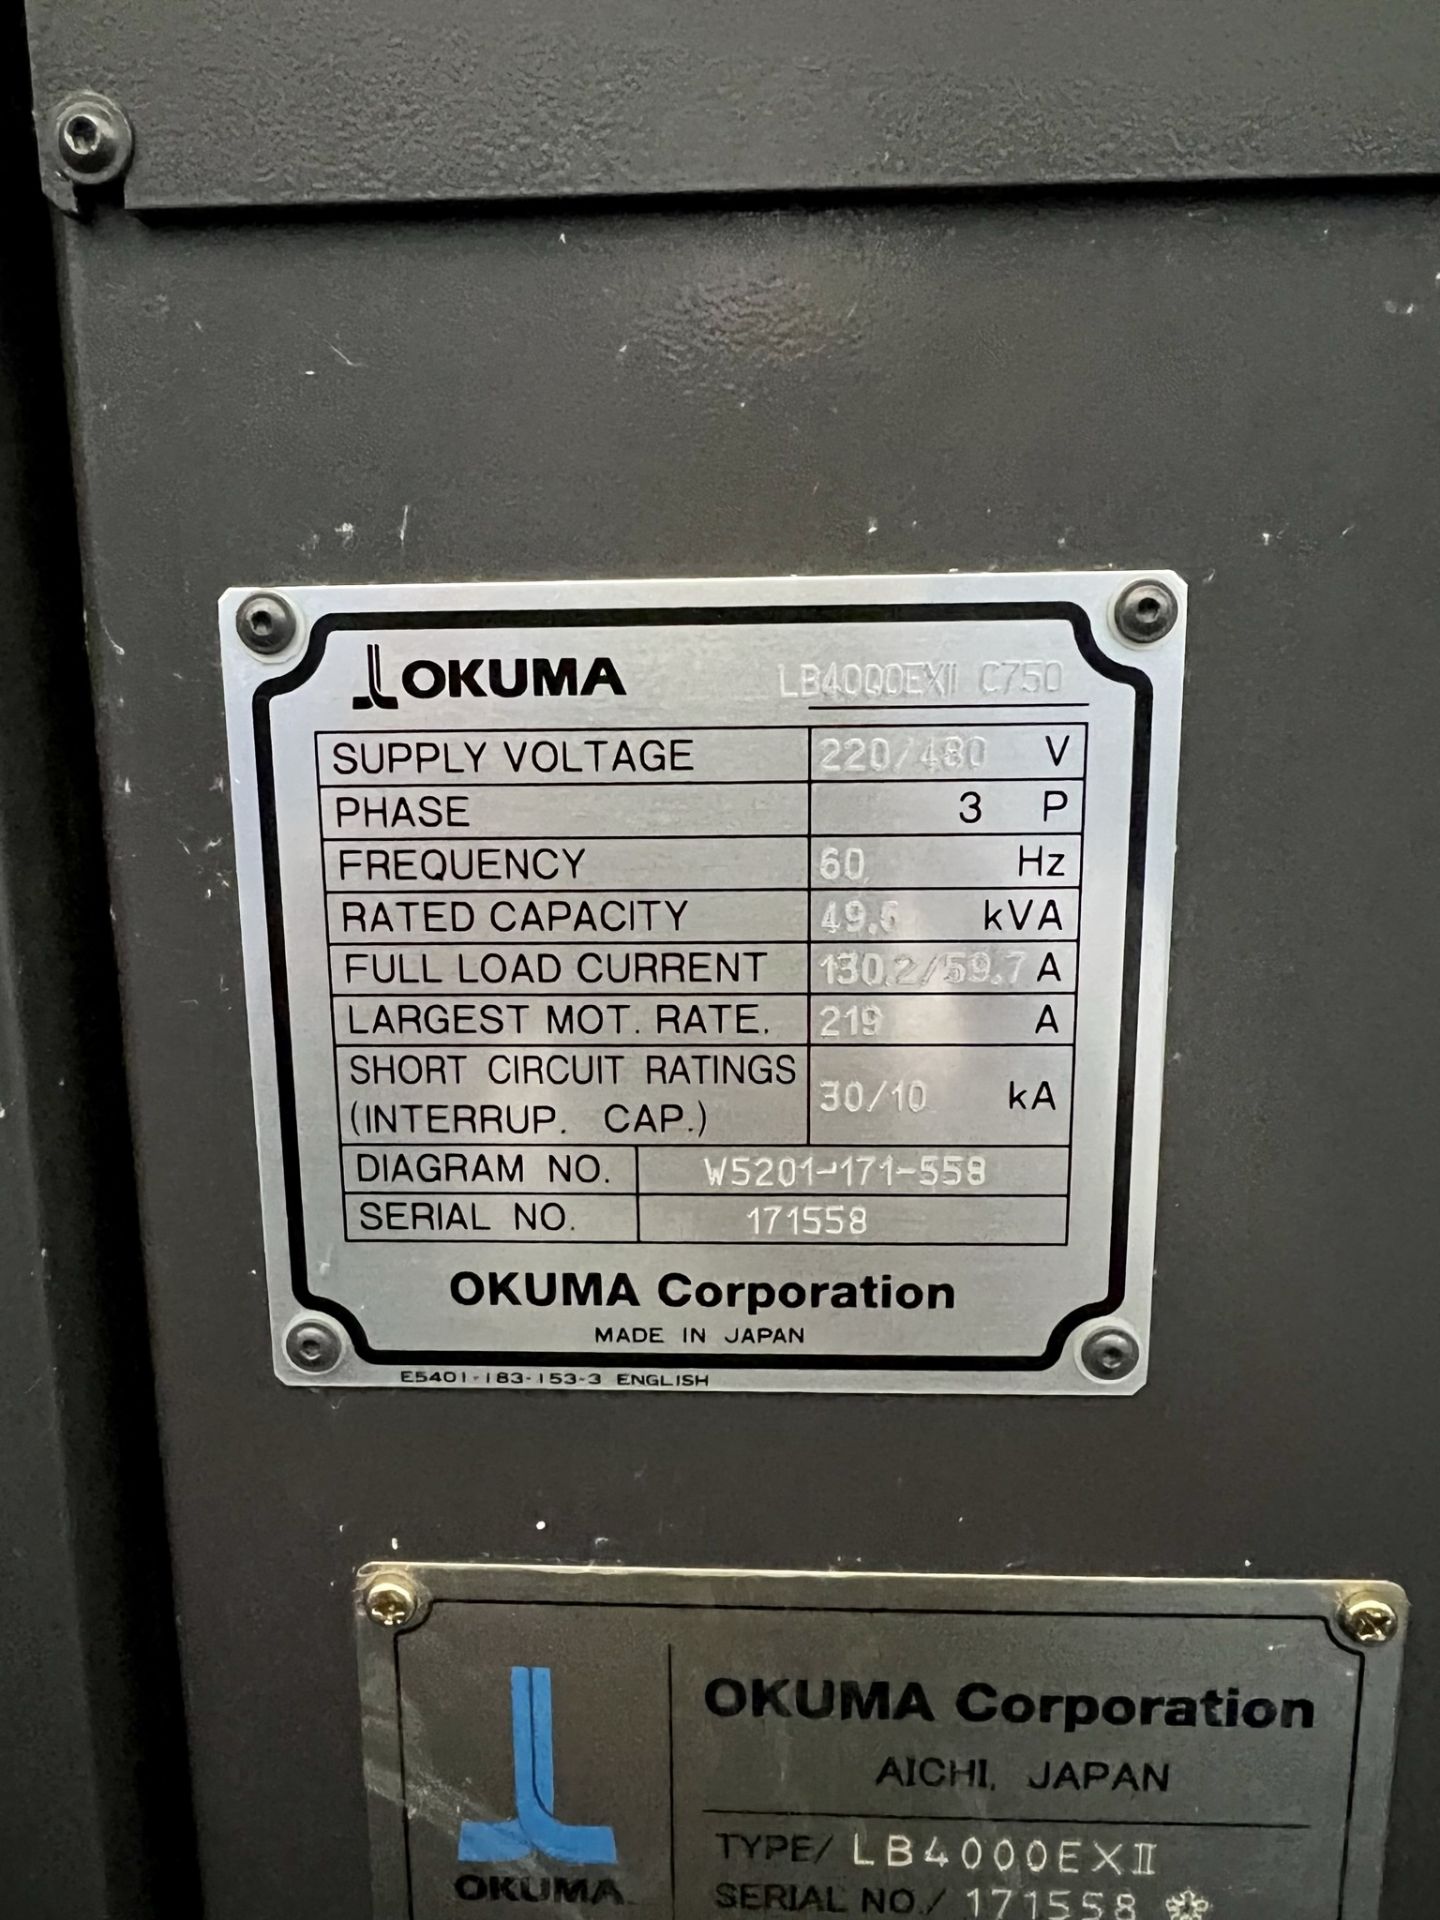 2013 OKUMA LB4000EXII-C750 TURNING CENTER, OSP-P300L CNC CONTROL, 10" KITAGAWA CHUCK, 2-AXIS, SWING: - Image 23 of 24